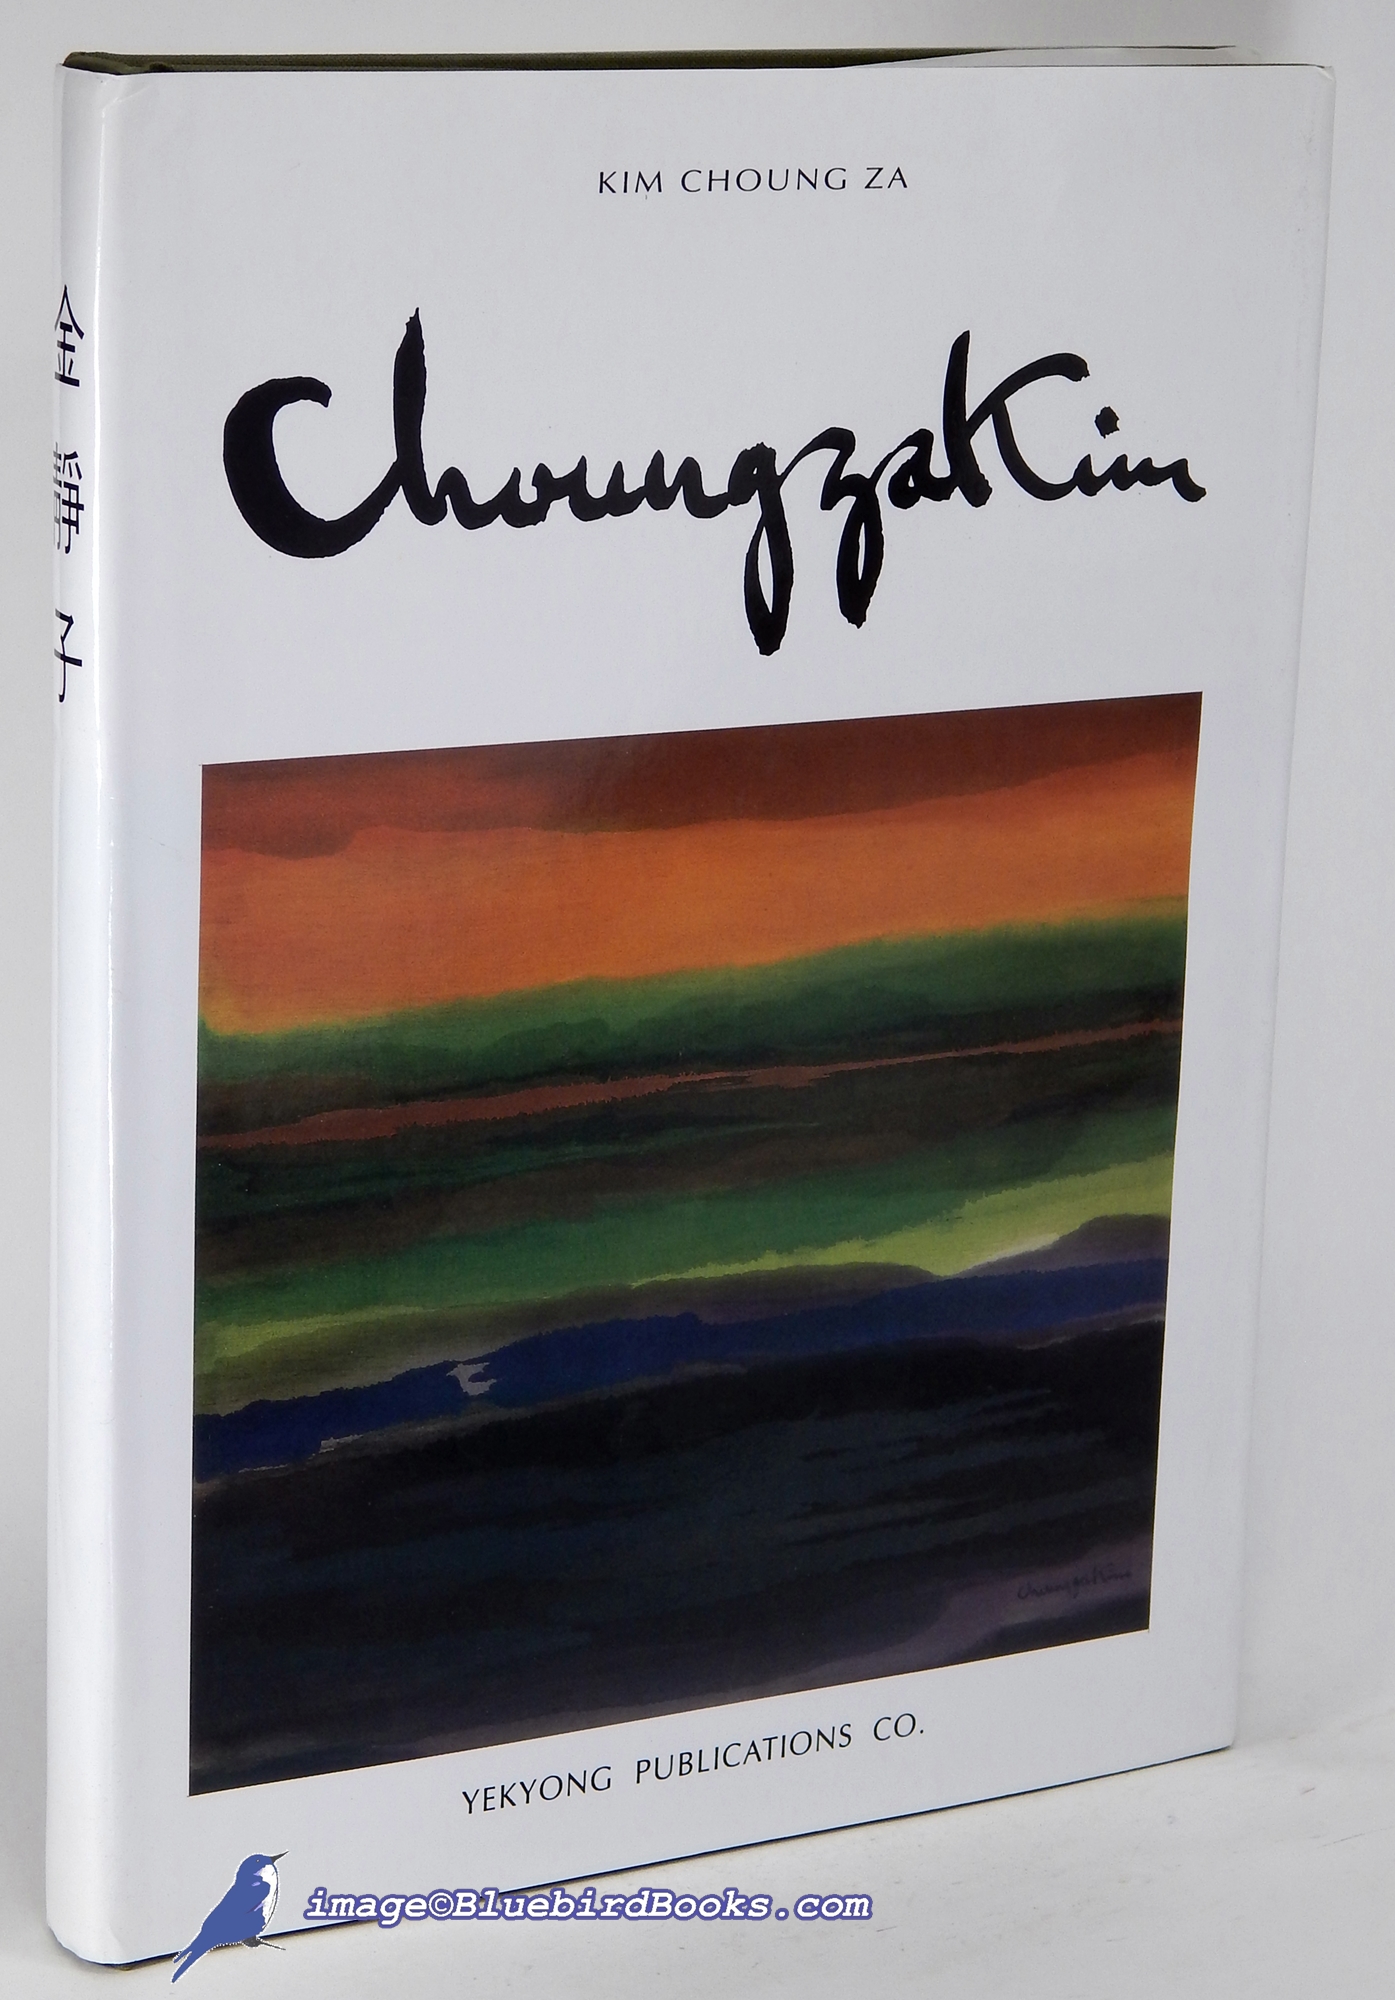 CHOUNG ZA KIM (ARTIST); SI HWA CHUNG (INTRODUCTION) - Retrospective of Choung Za Kim